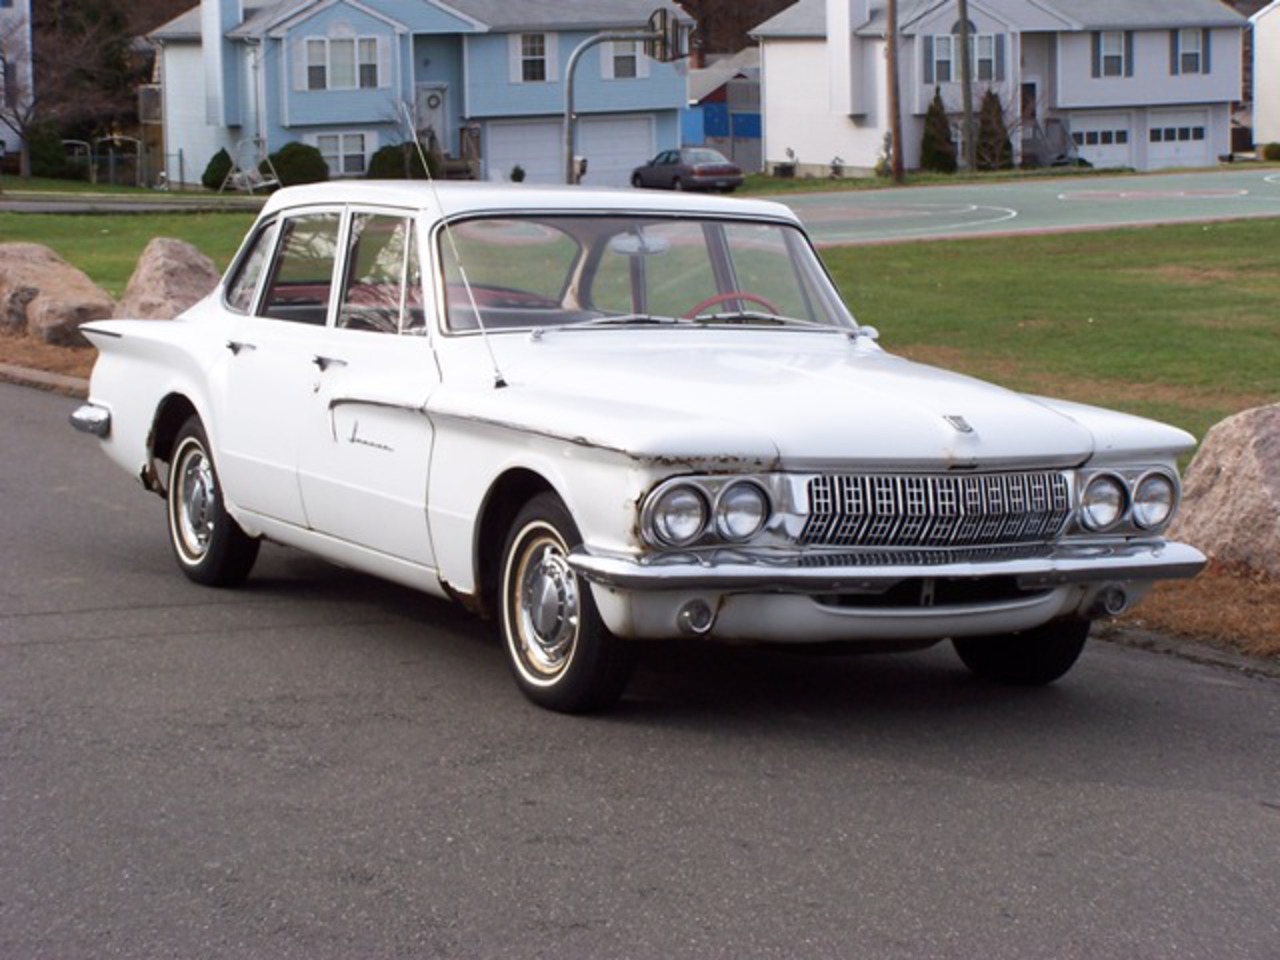 MakeModel: Dodge Lancer Color: White Year: 1962. Mileage: 48,500